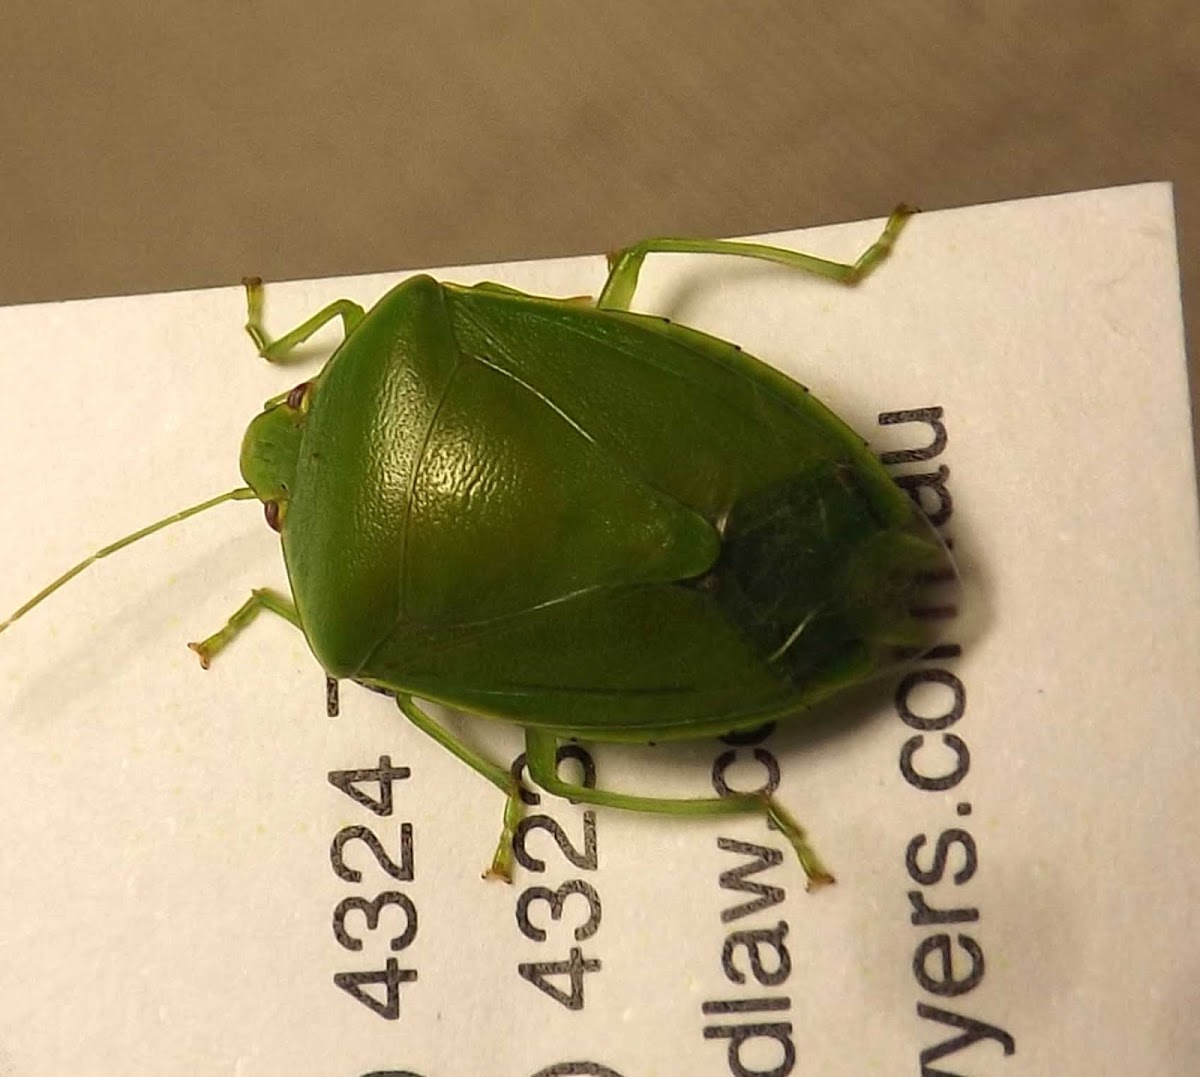 Green Potato Bug